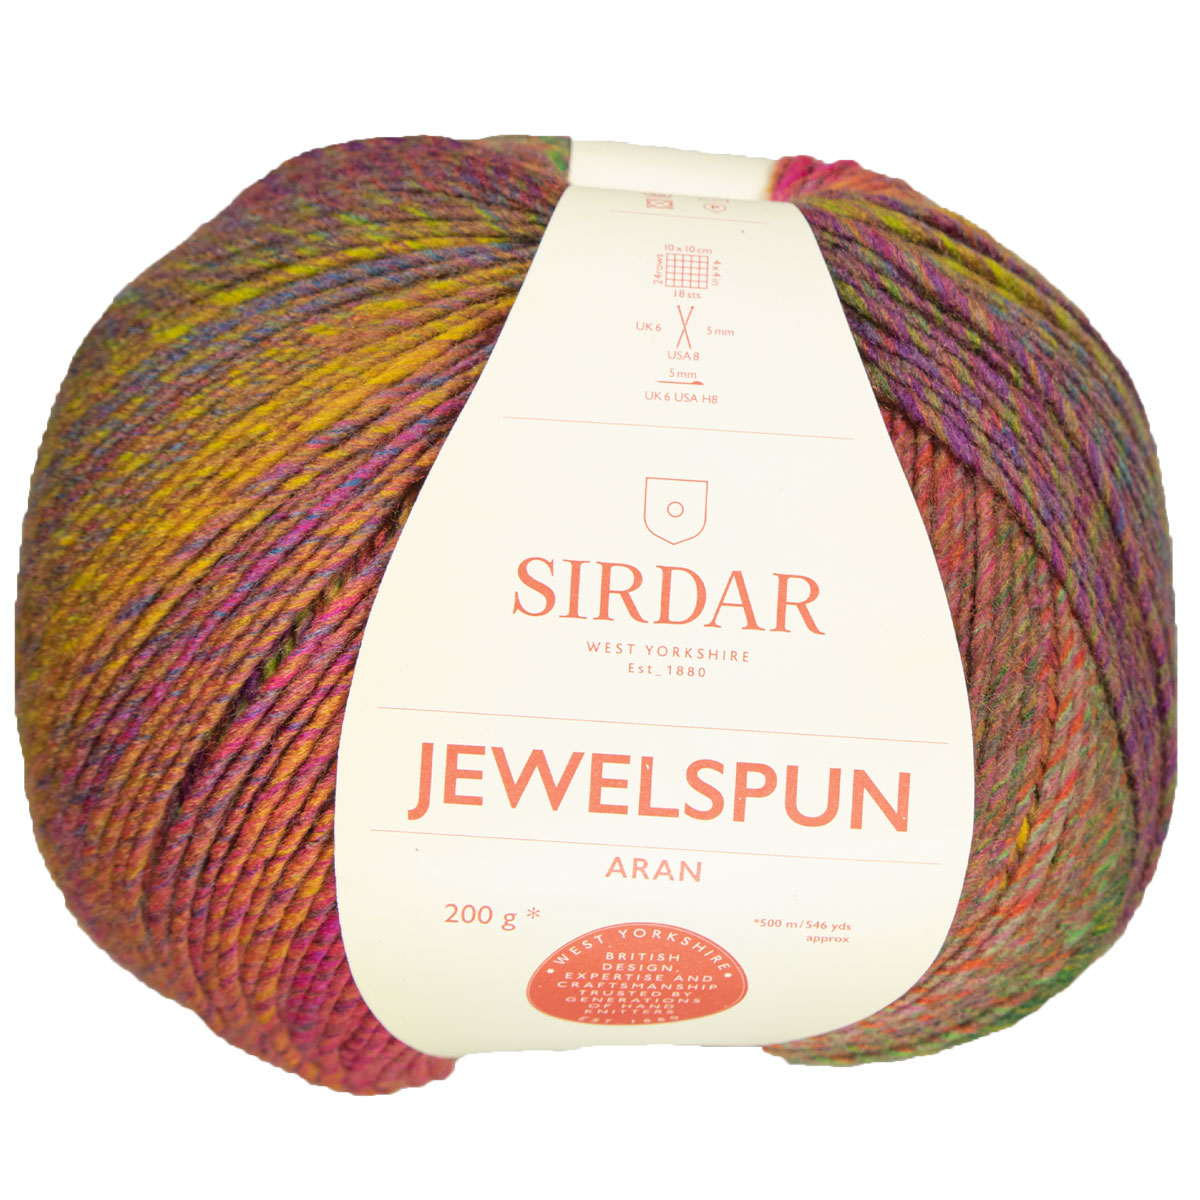 Sirdar Jewelspun Yarn at WEBS